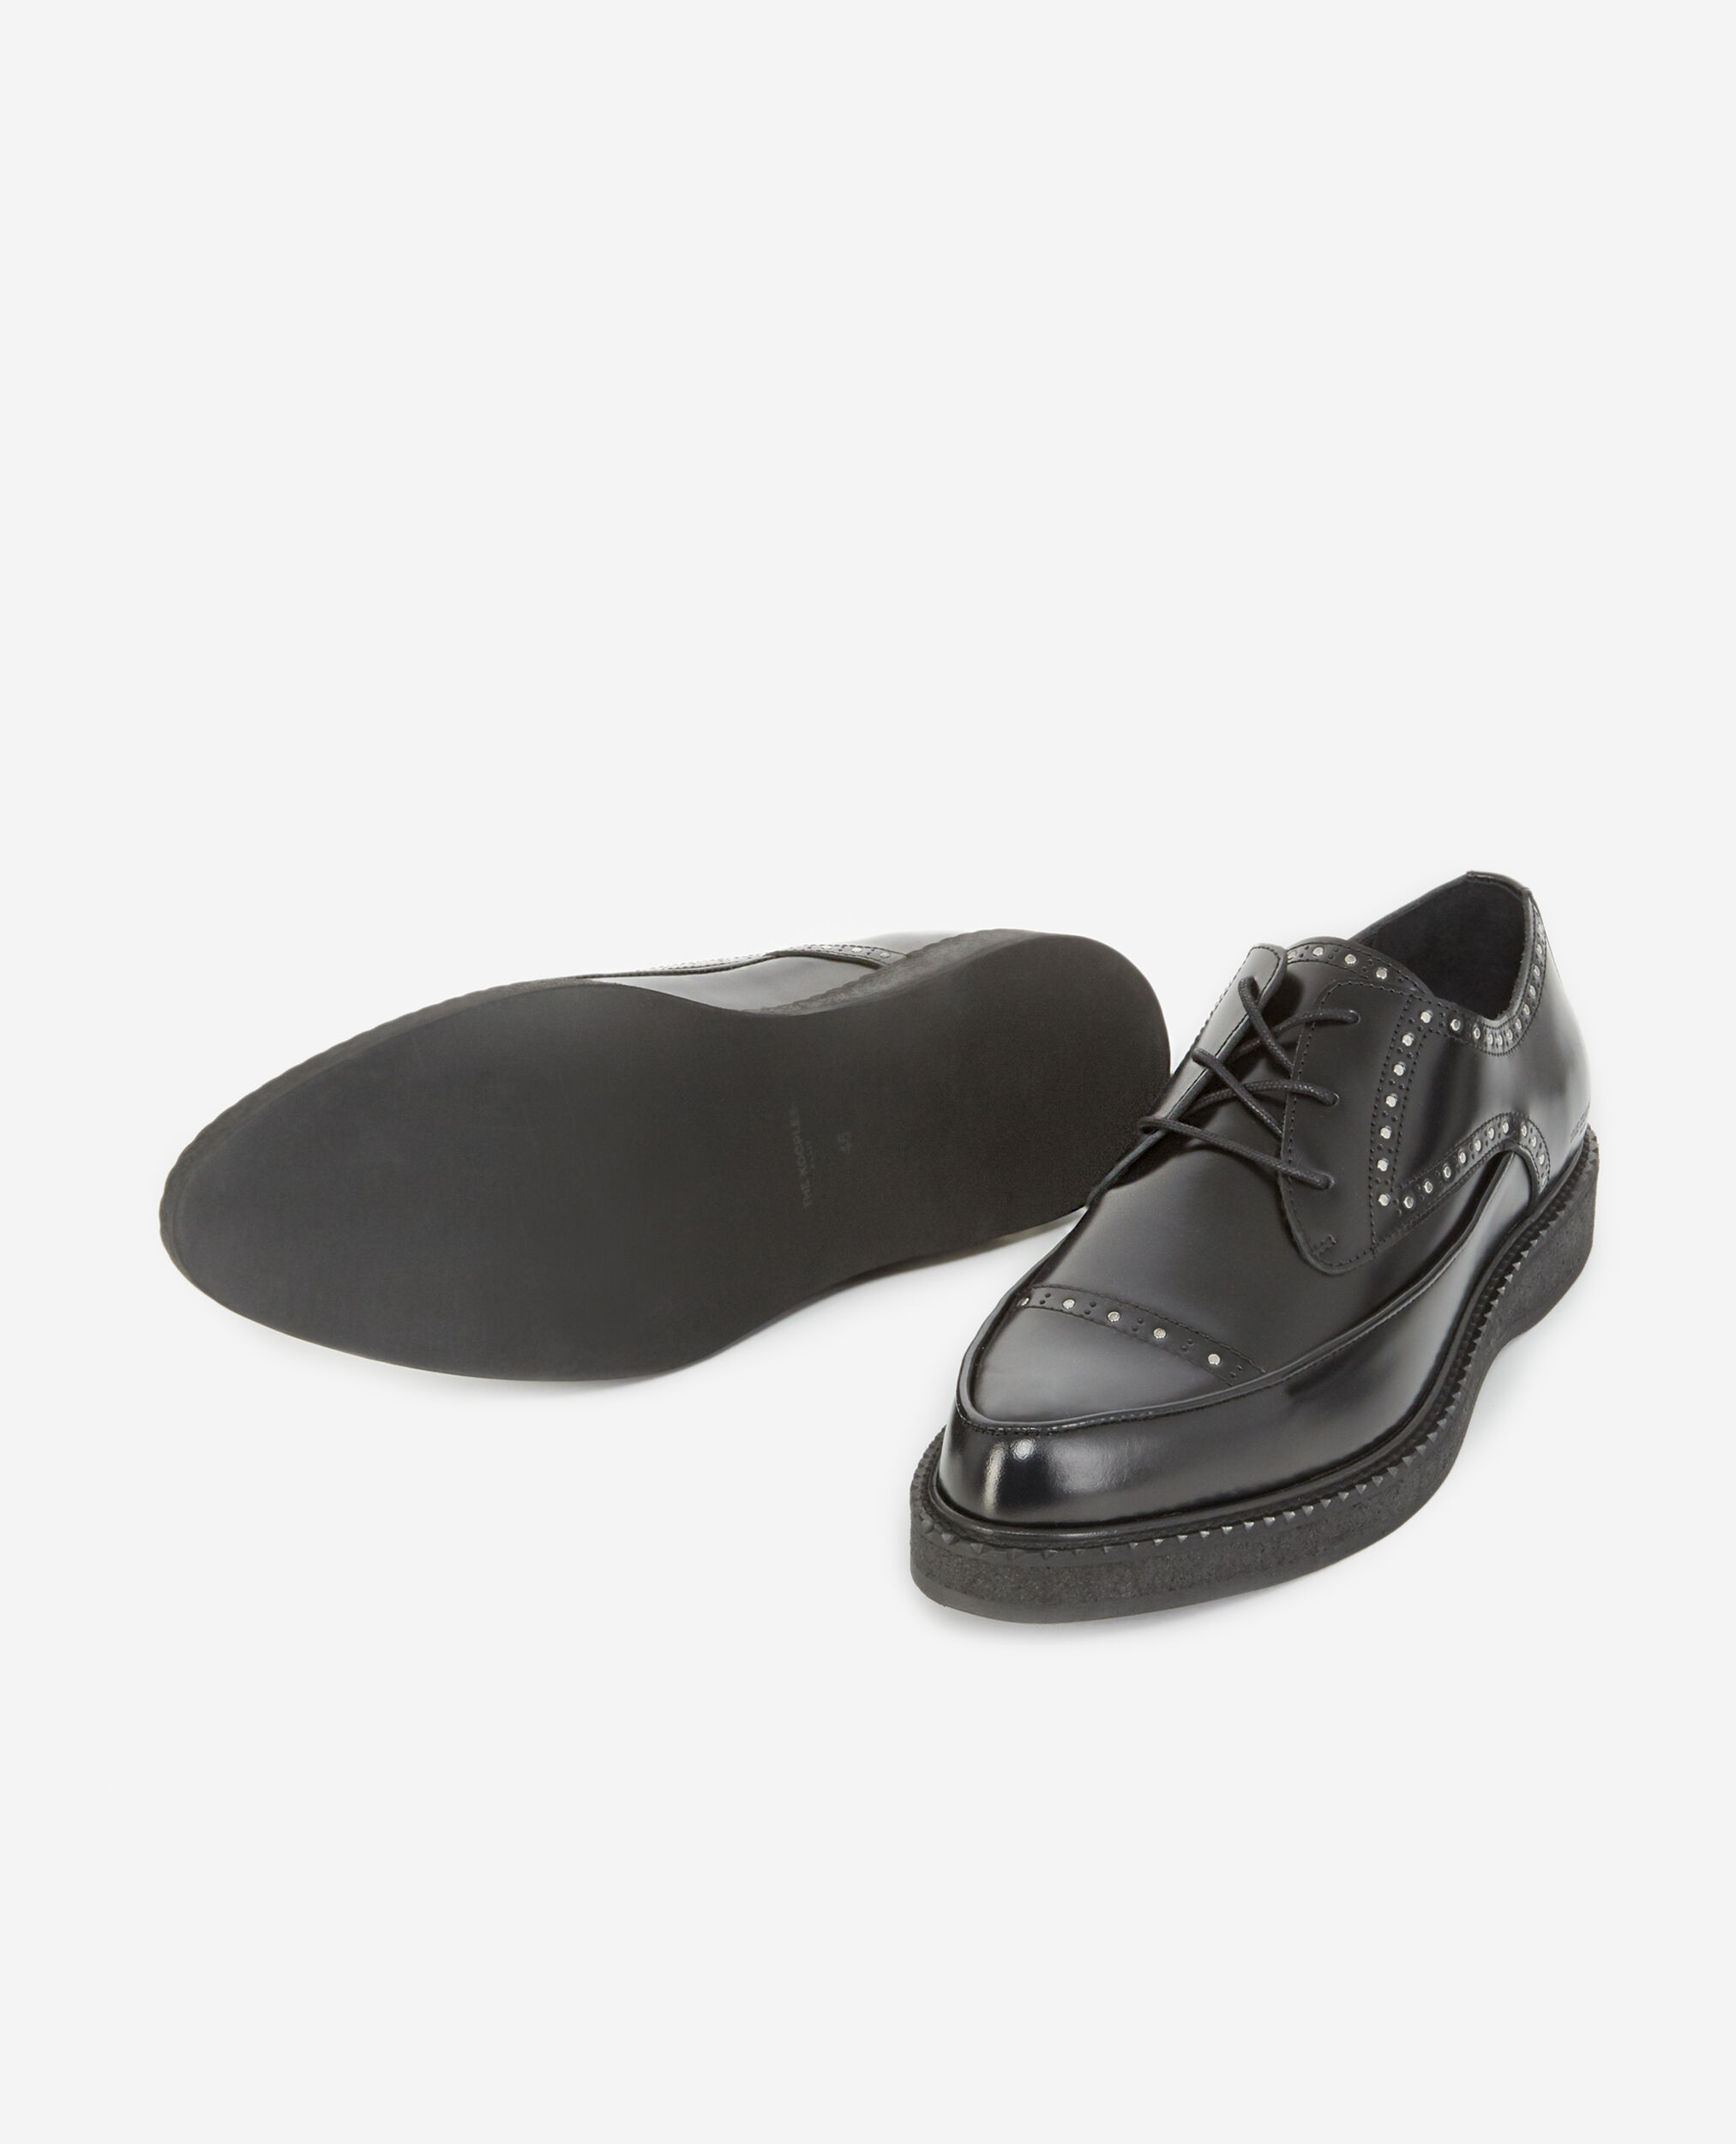 Zapatos negros piel detalle tachuelas | The